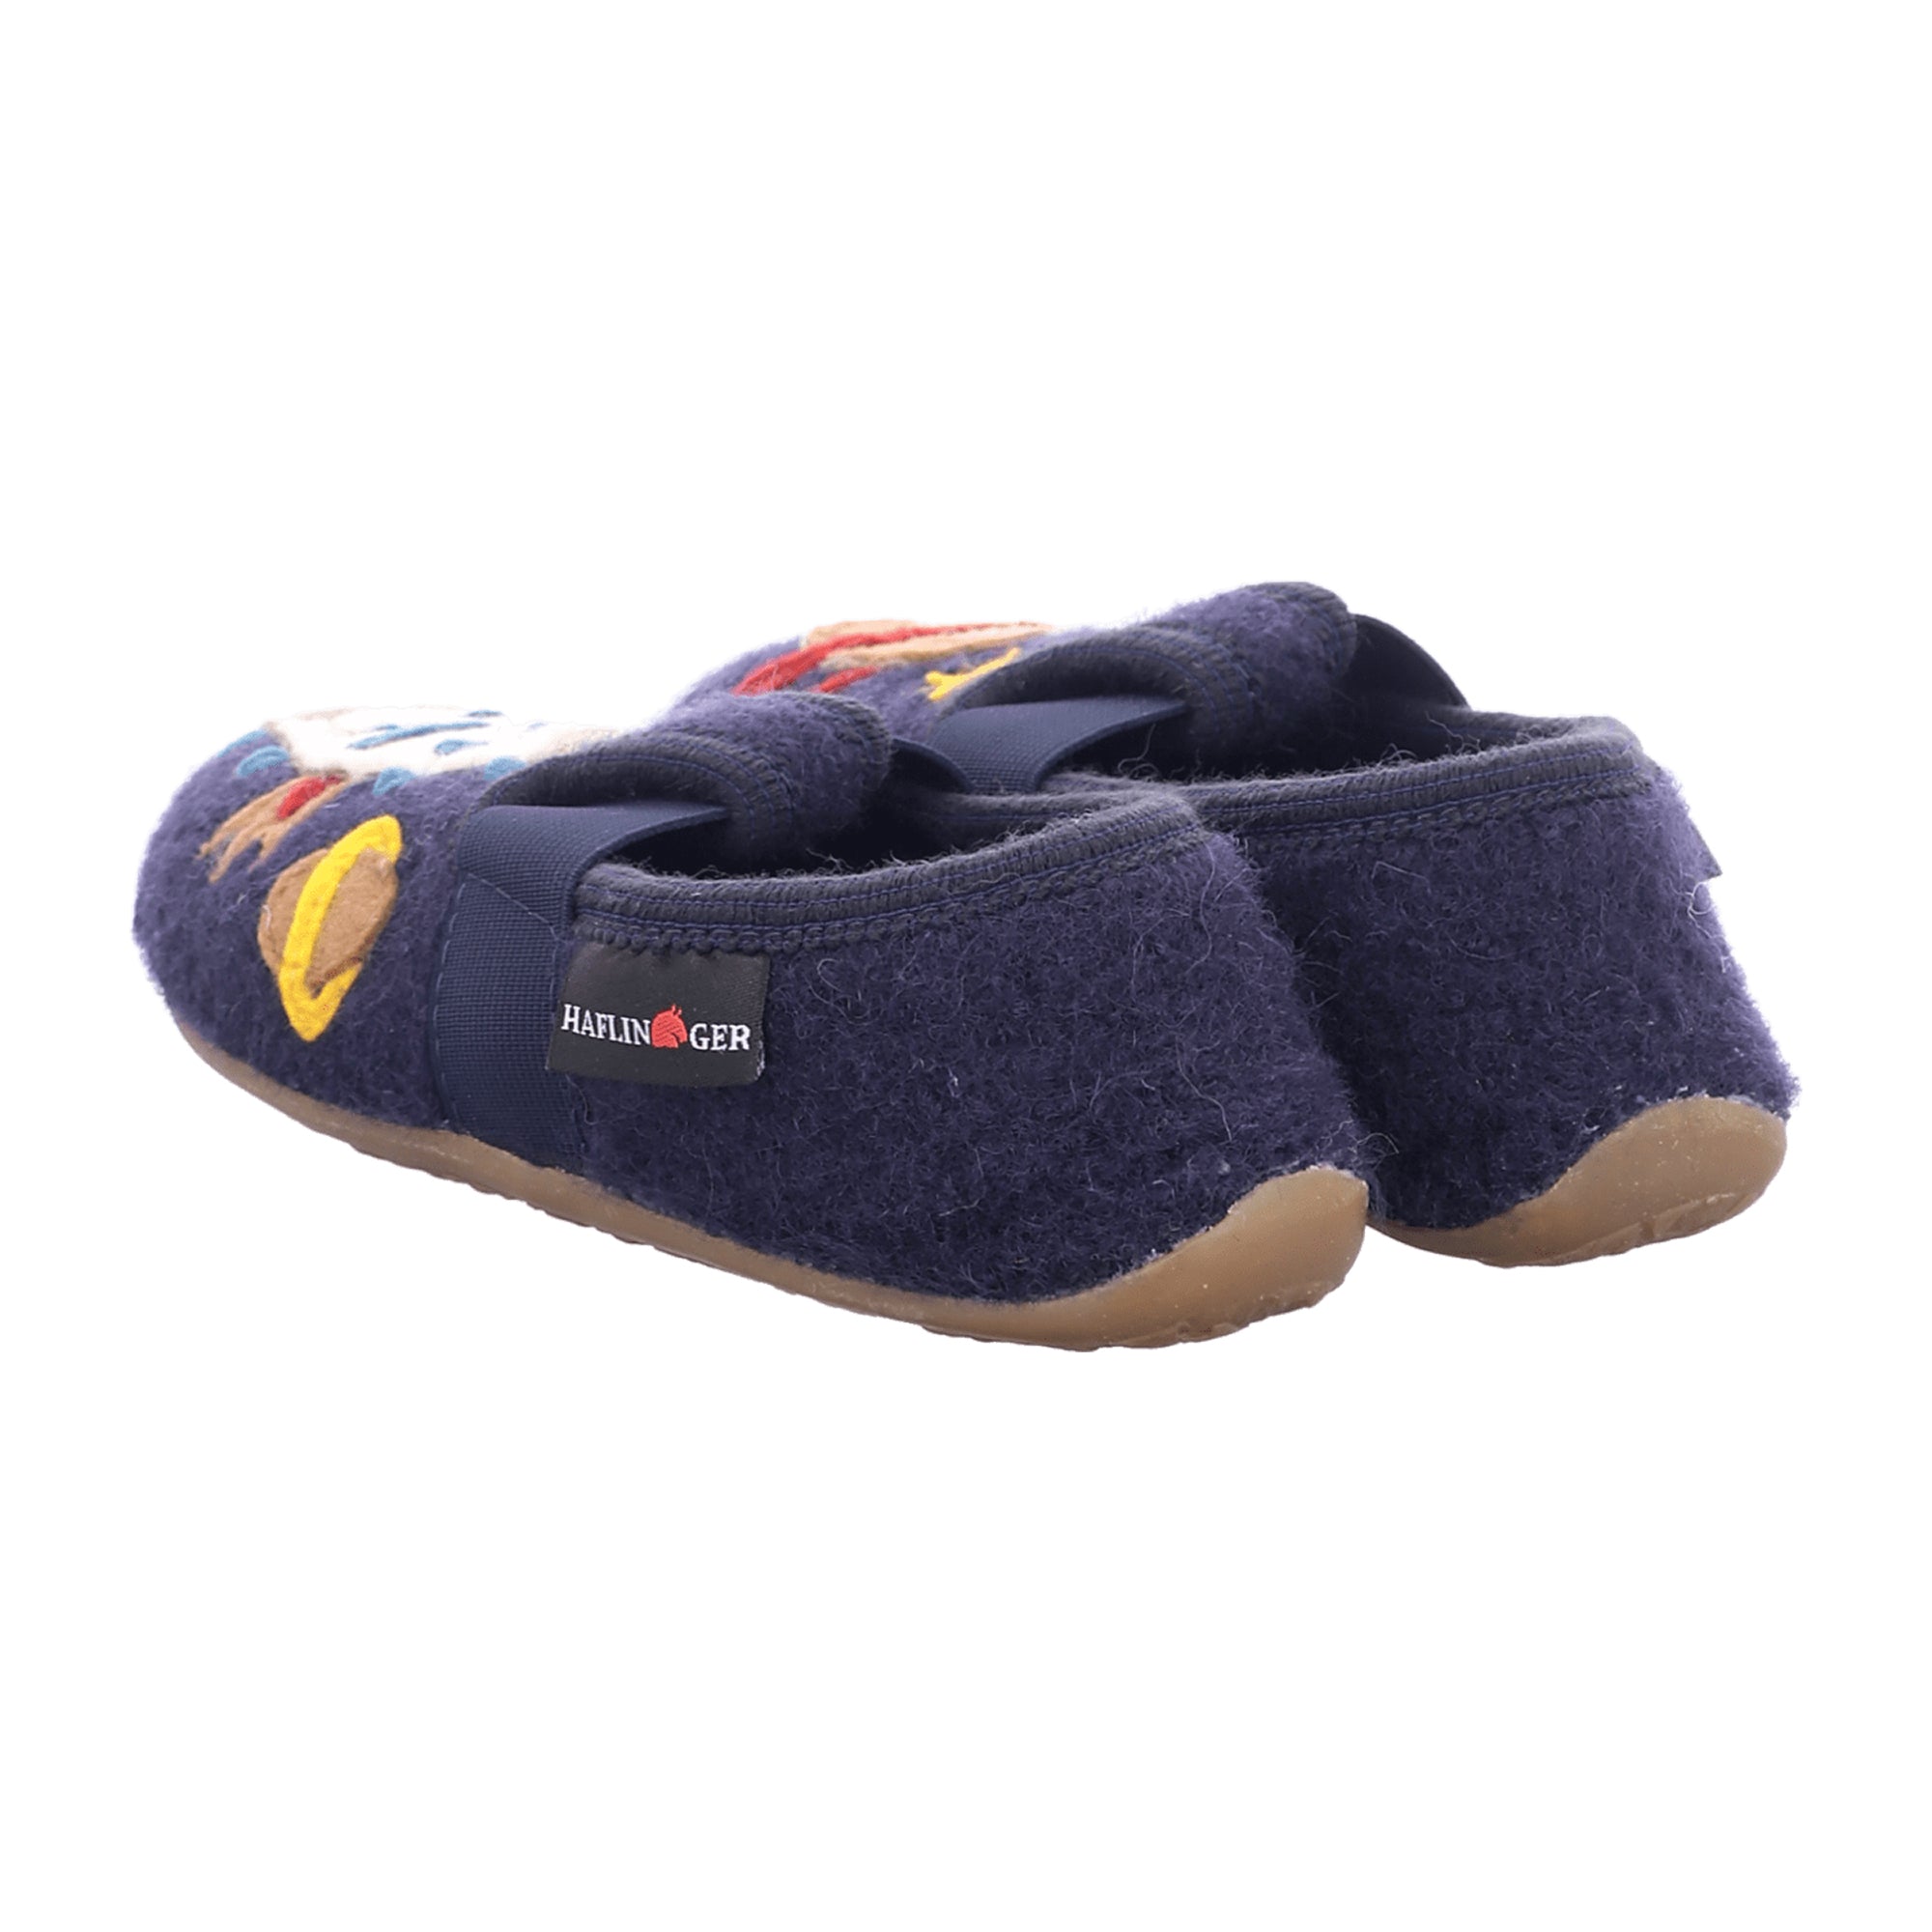 Haflinger Everest Rocket Kids Slippers - Durable Blue Wool, Comfortable & Stylish